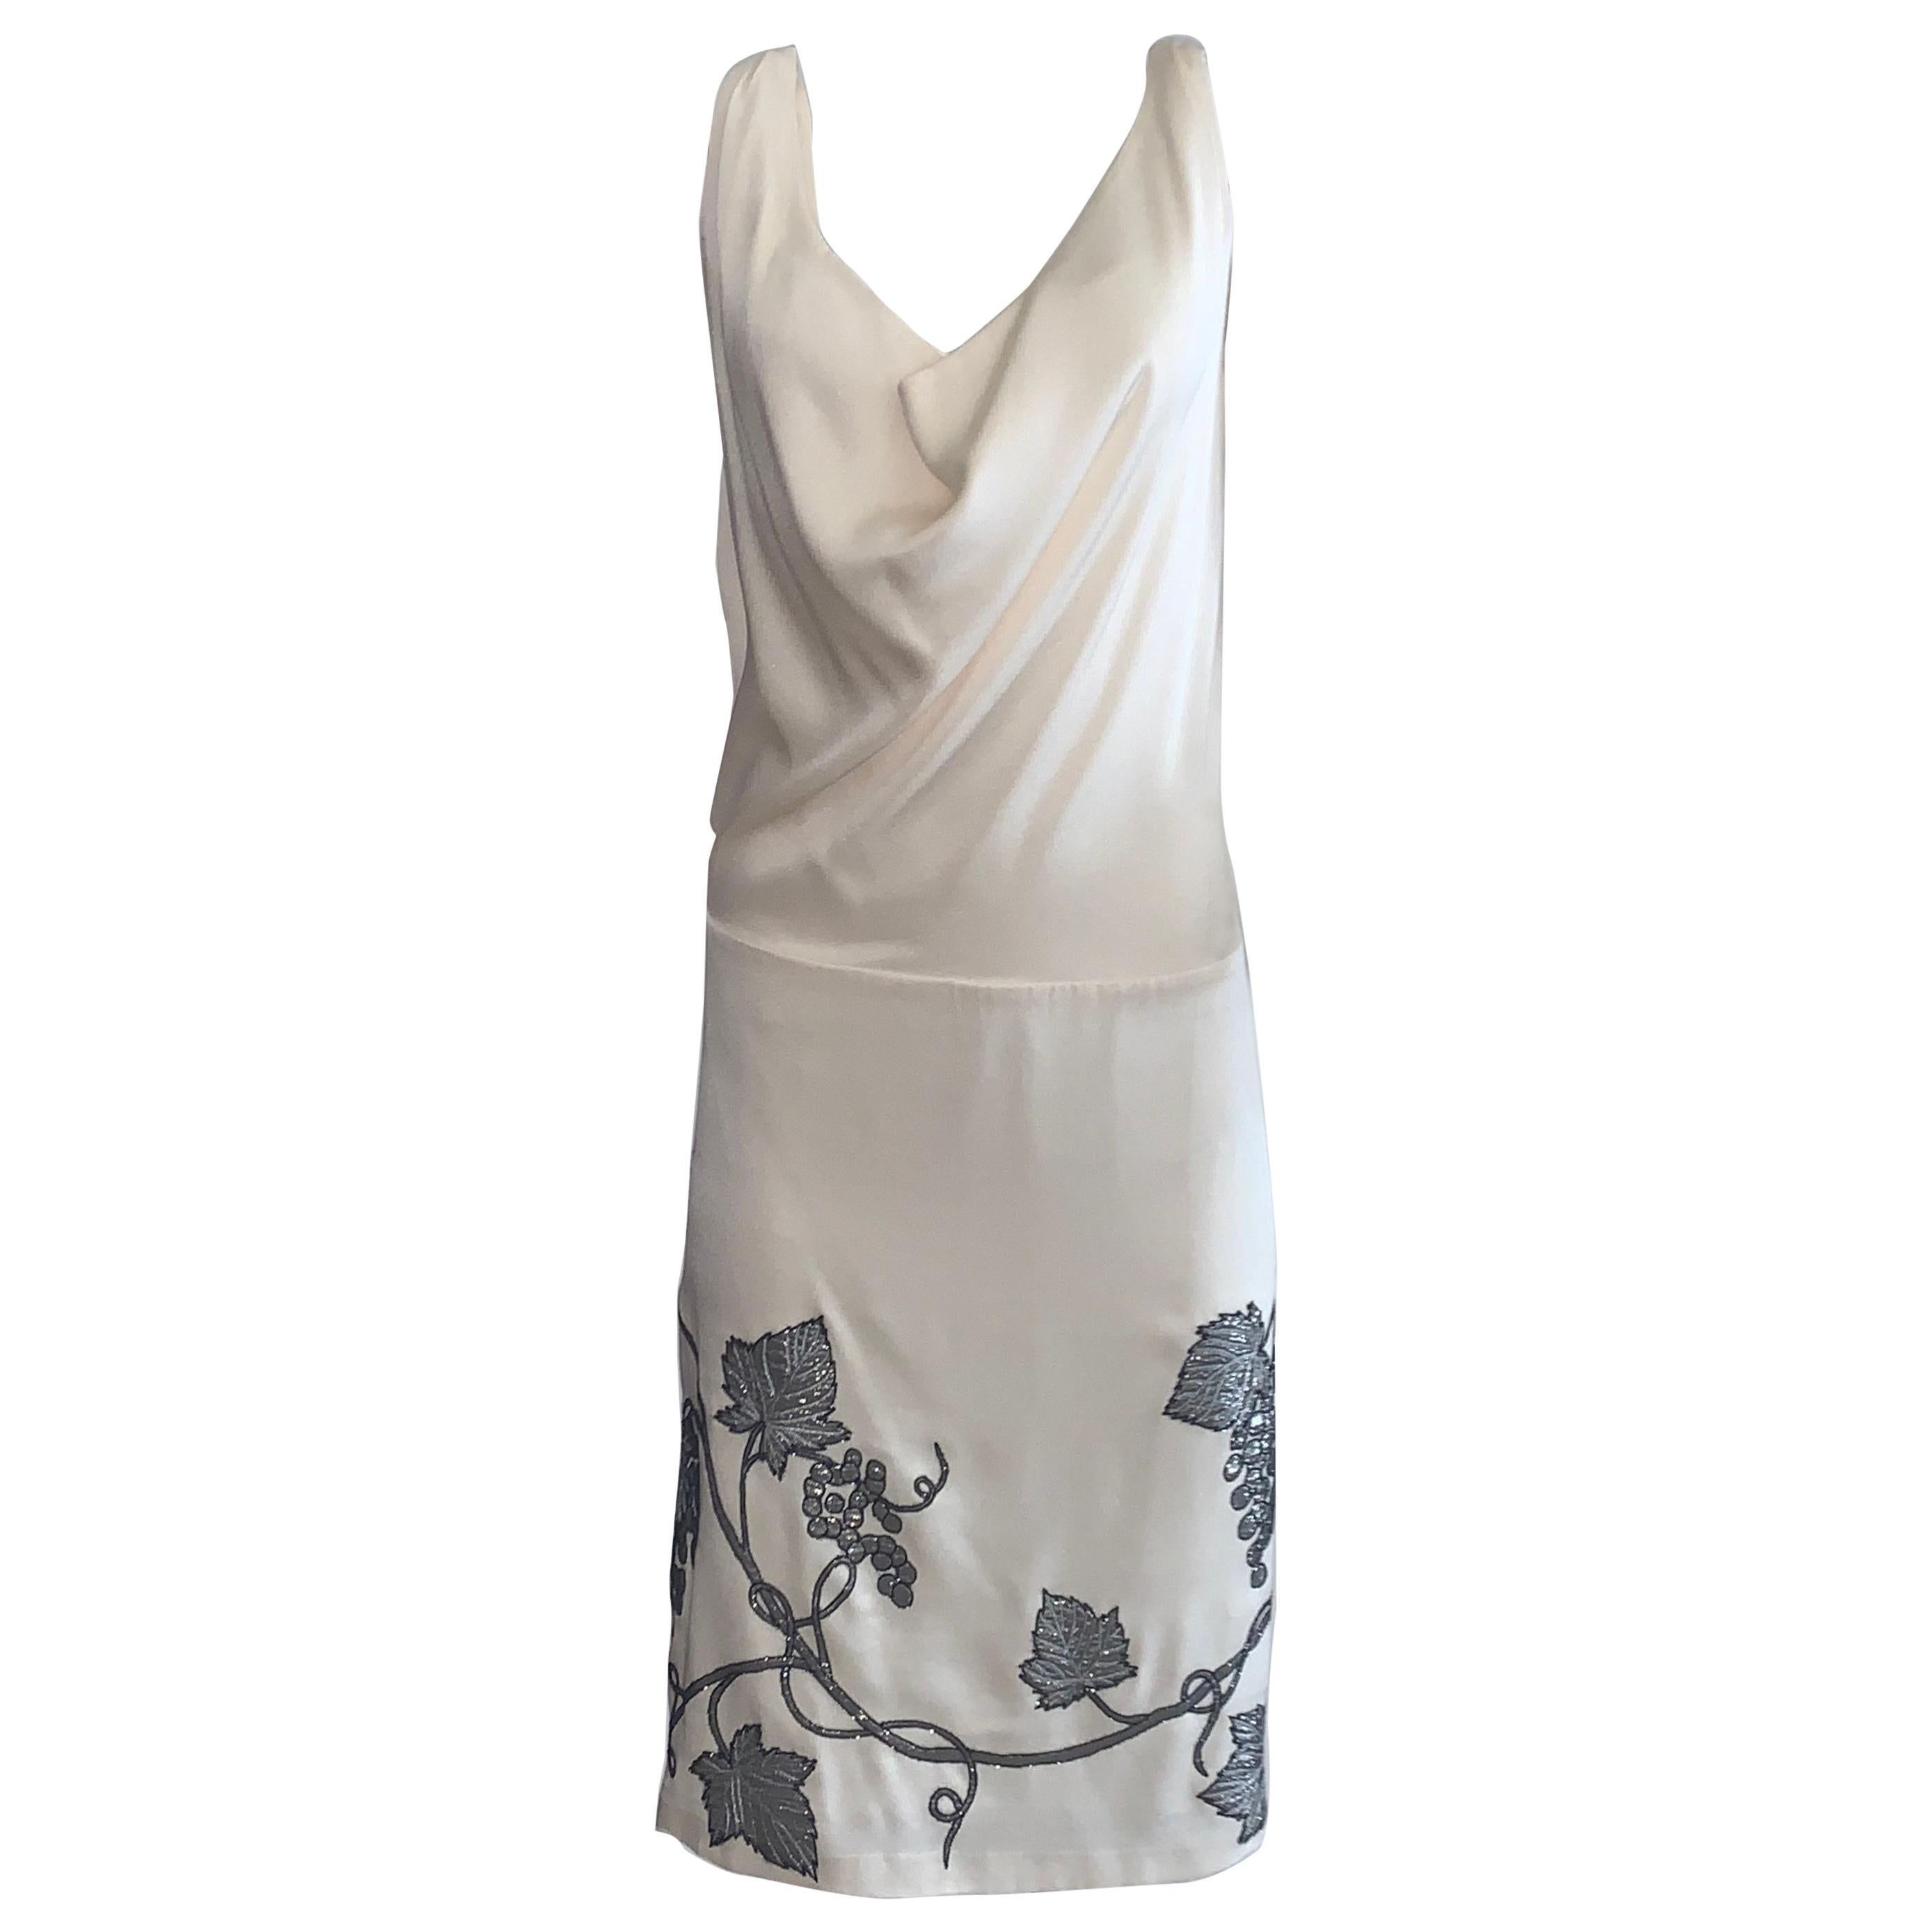 Alexander McQueen 2007 Backless Grape Dress in Silver and Cream White Silk